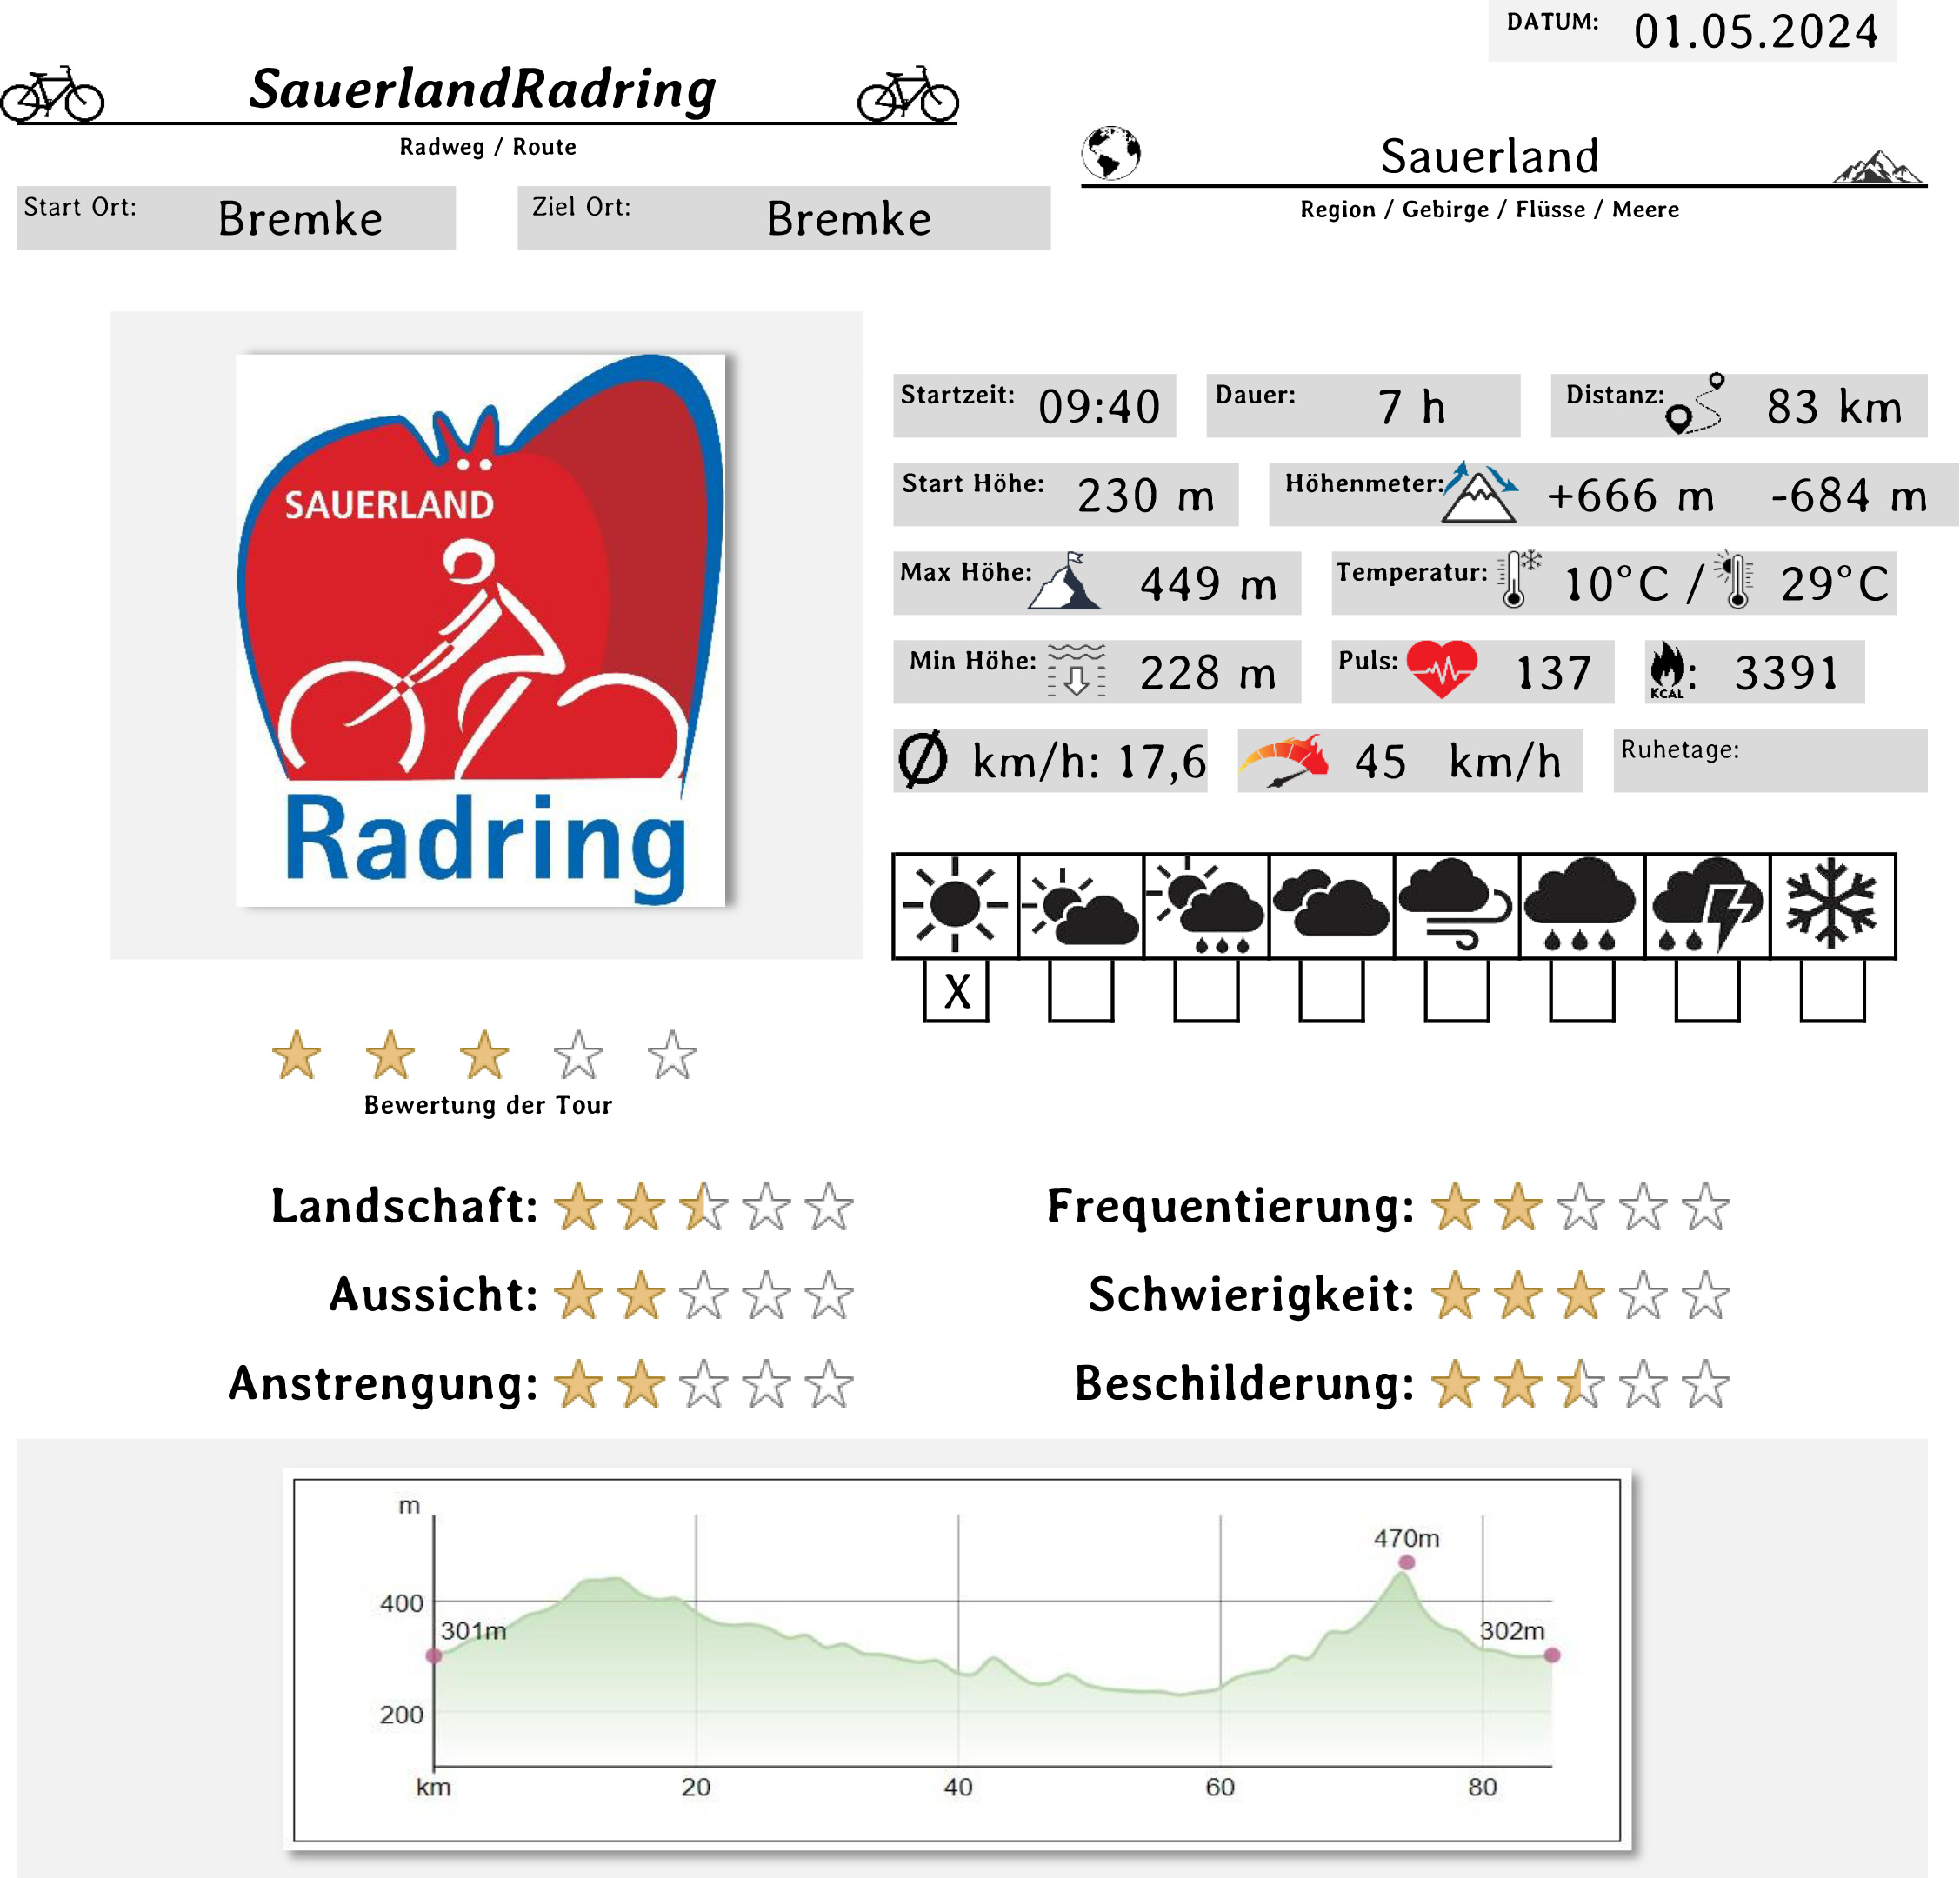 SauerlandRadring Daten